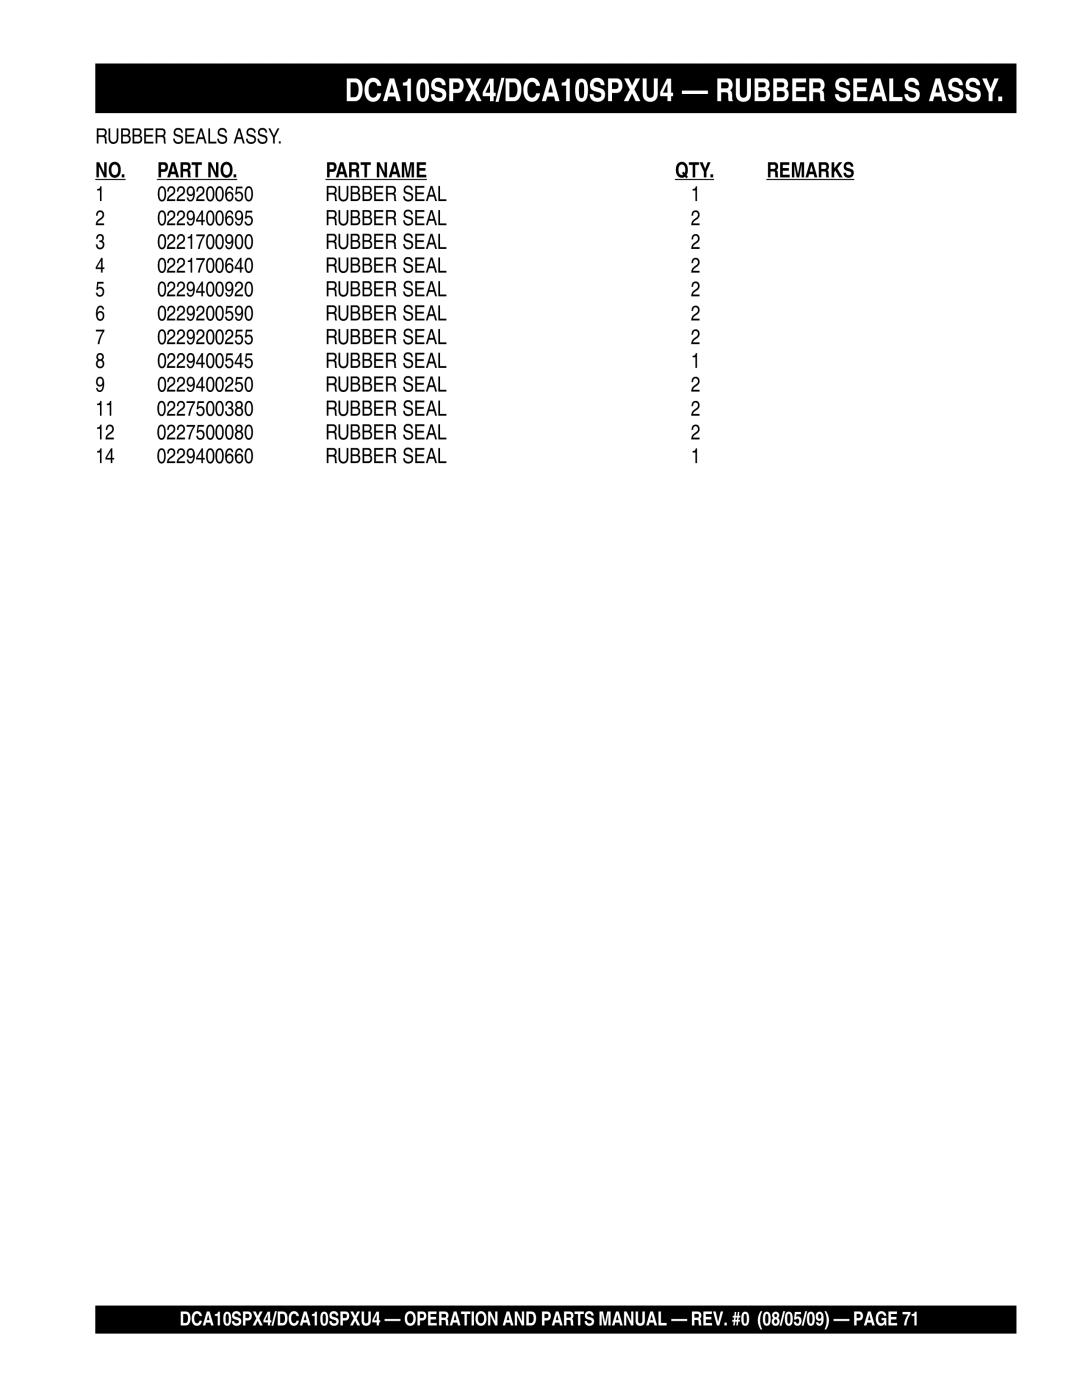 Multiquip operation manual DCA10SPX4/DCA10SPXU4 - RUBBER SEALS ASSY, Part Name 